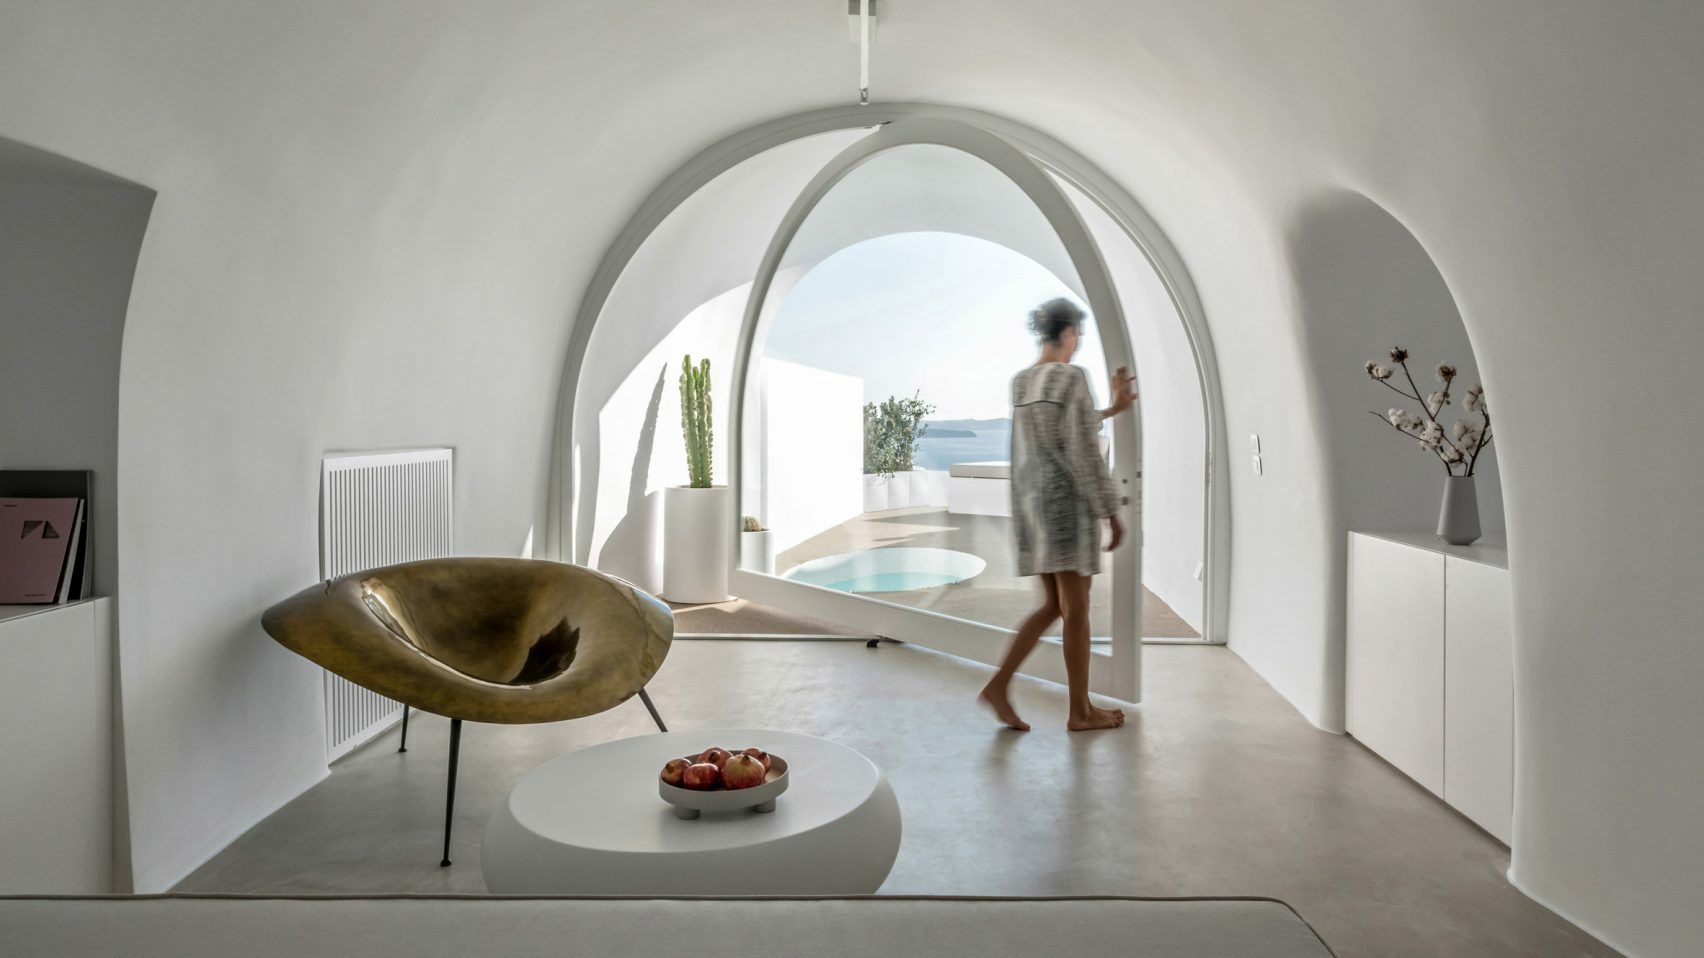 hotel-in-santorini-kapsimalis-architects-architecture-hotels-greece_dezeen_2364_hero2-1704x958.jpg